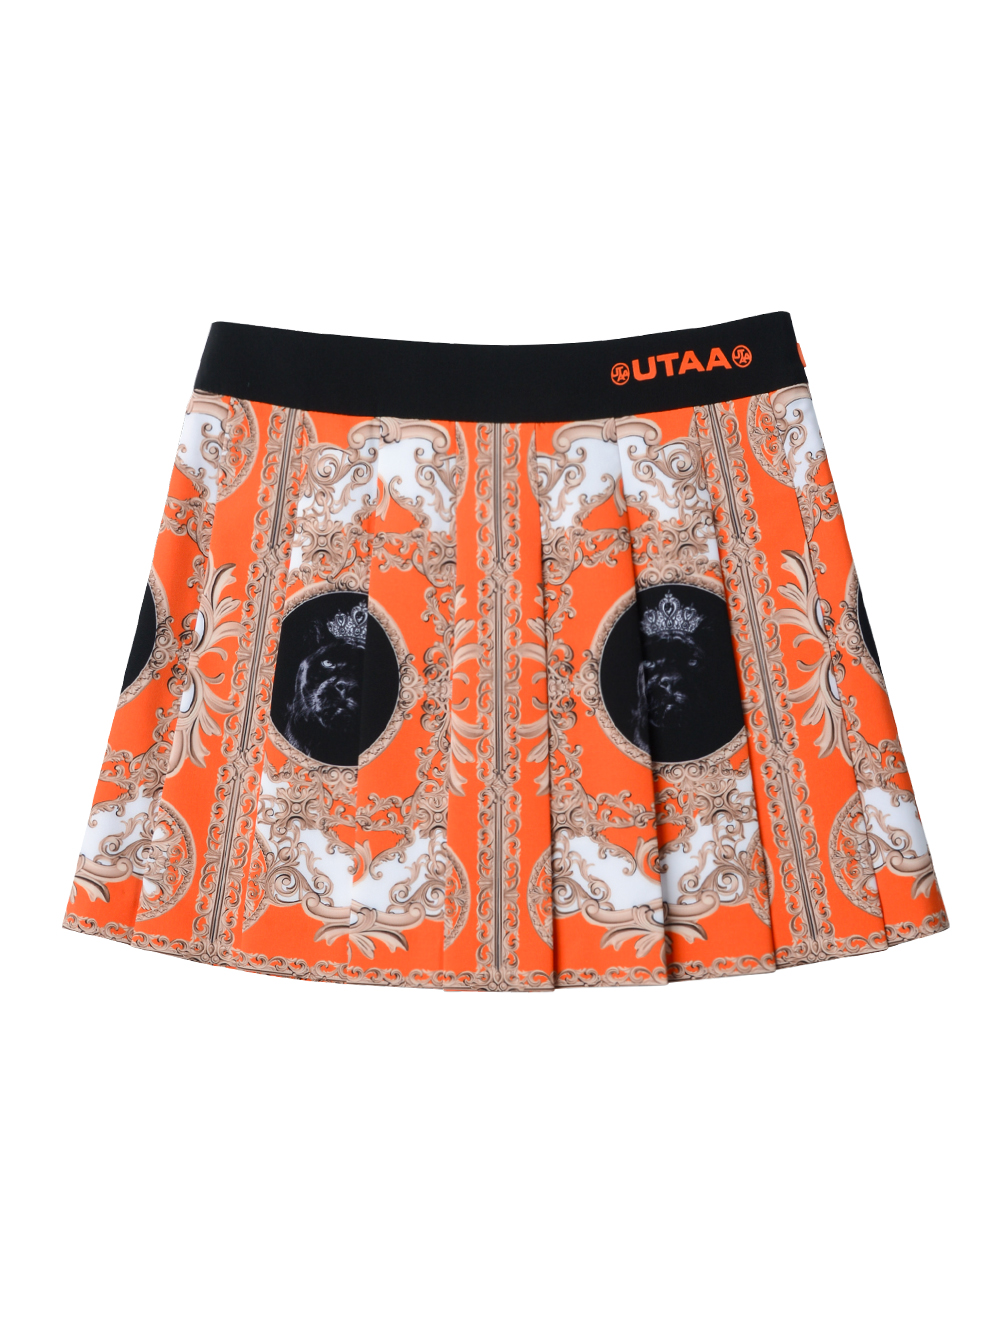 UTAA Panther Buckingham Skirt : Orange (UC3SKF591OR)